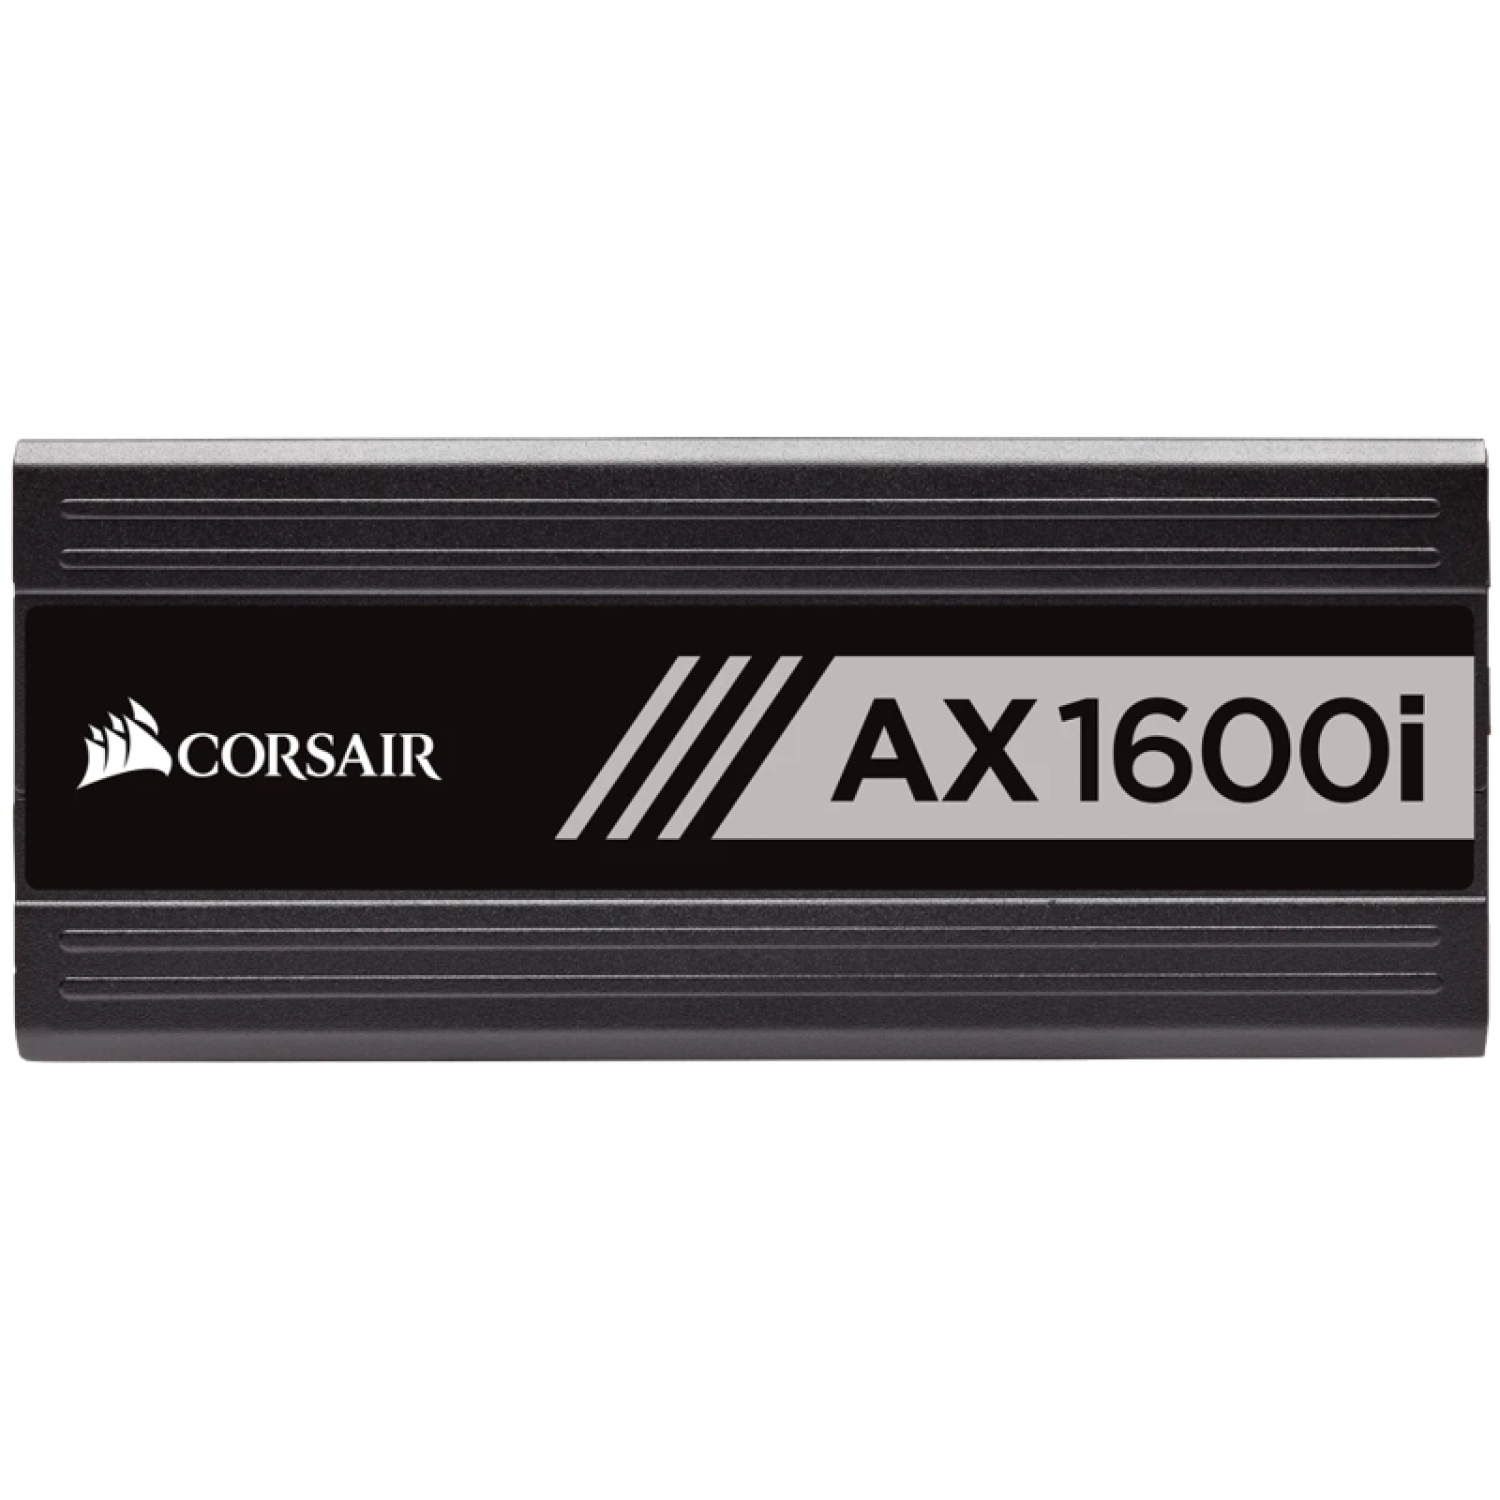 AX1600i 80 PLUS Titanium Netzteil, vollmodular - 1600 Watt